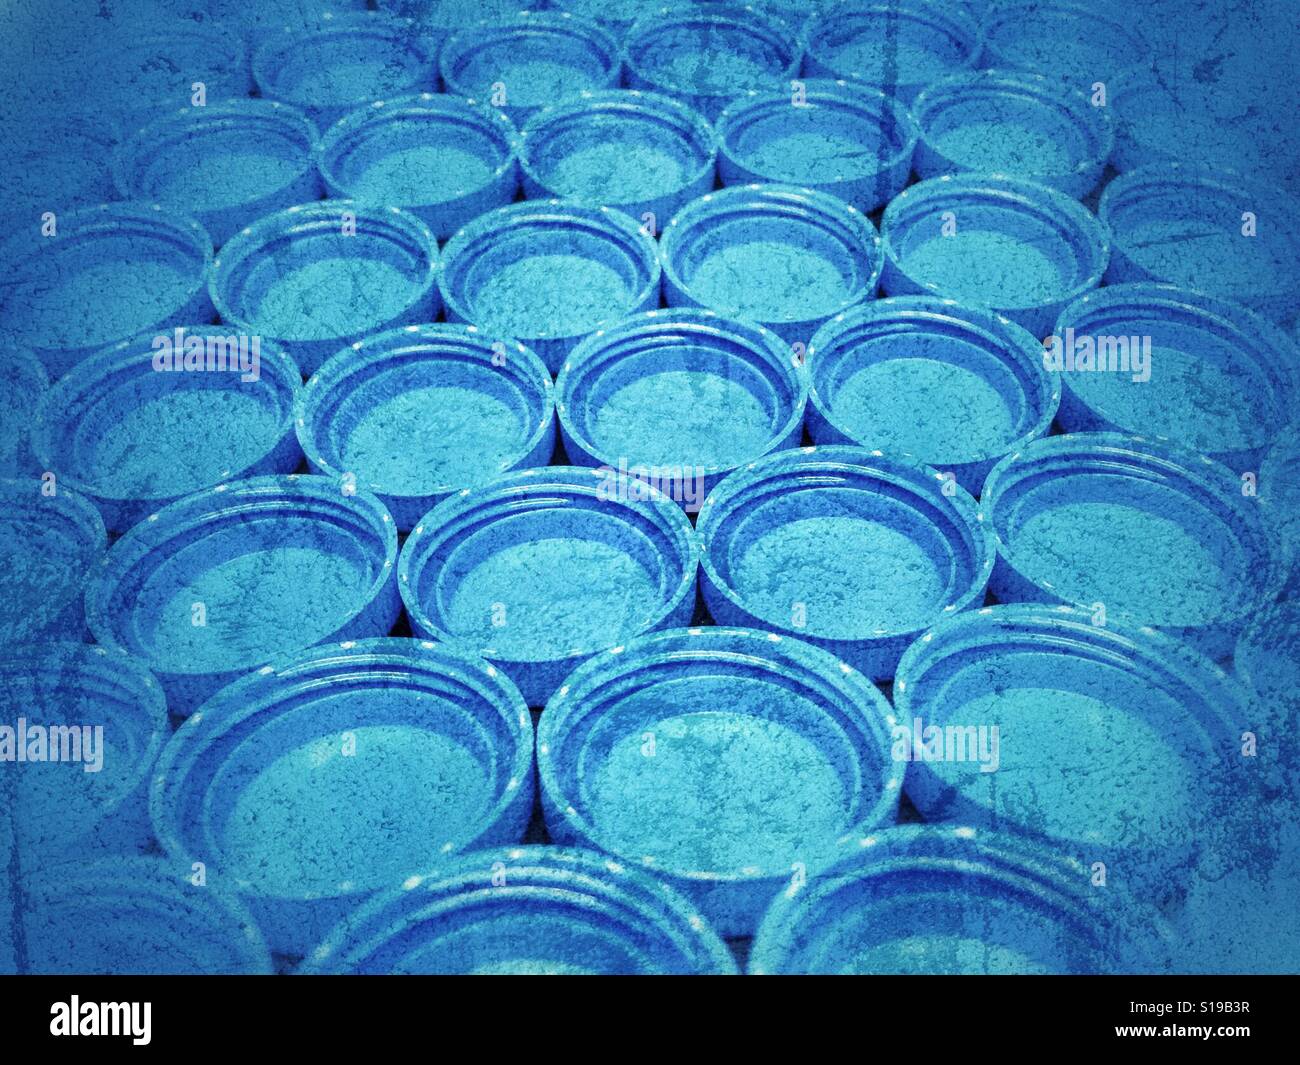 Blue plastic bottle caps in grunge Stock Photo